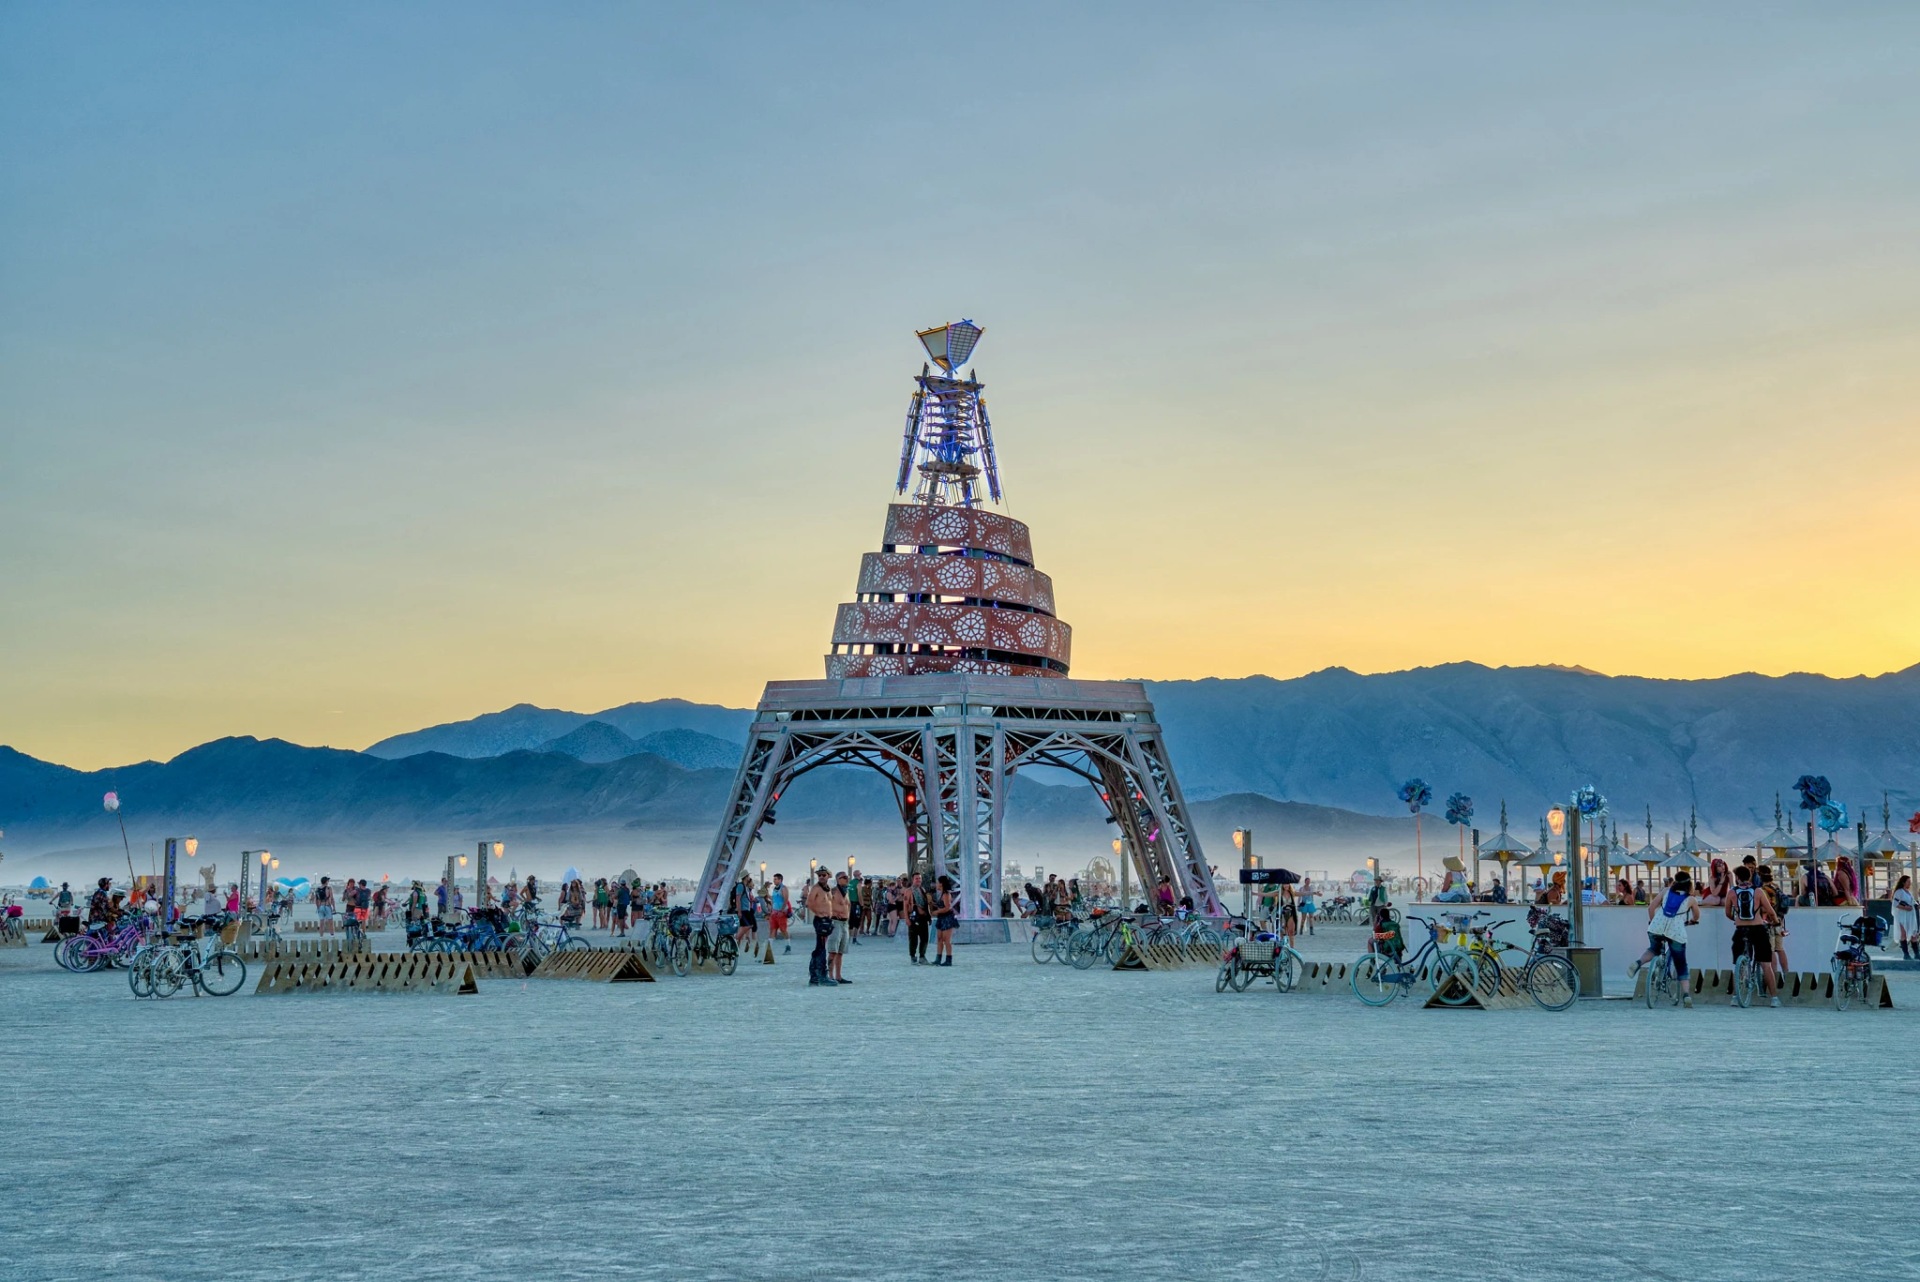 A Burning Man sculpture set against the twilight sky